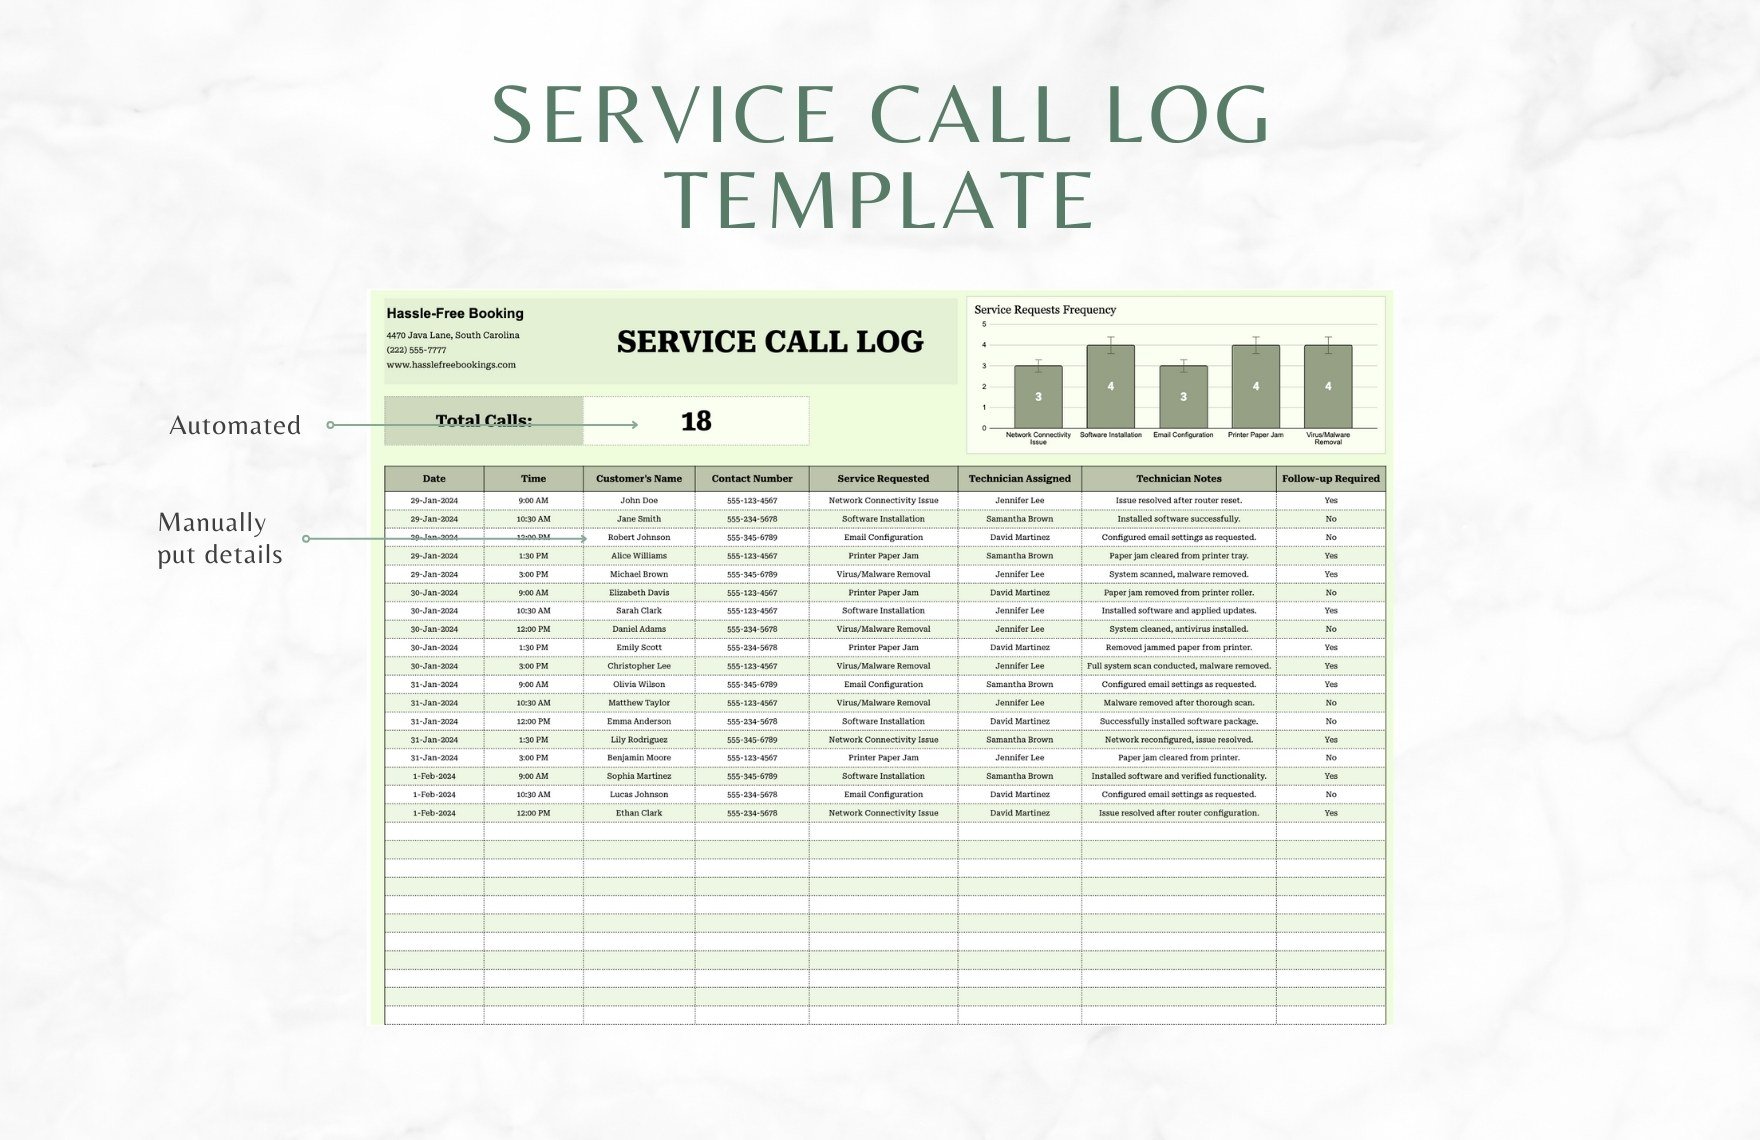 Service Call Log Template